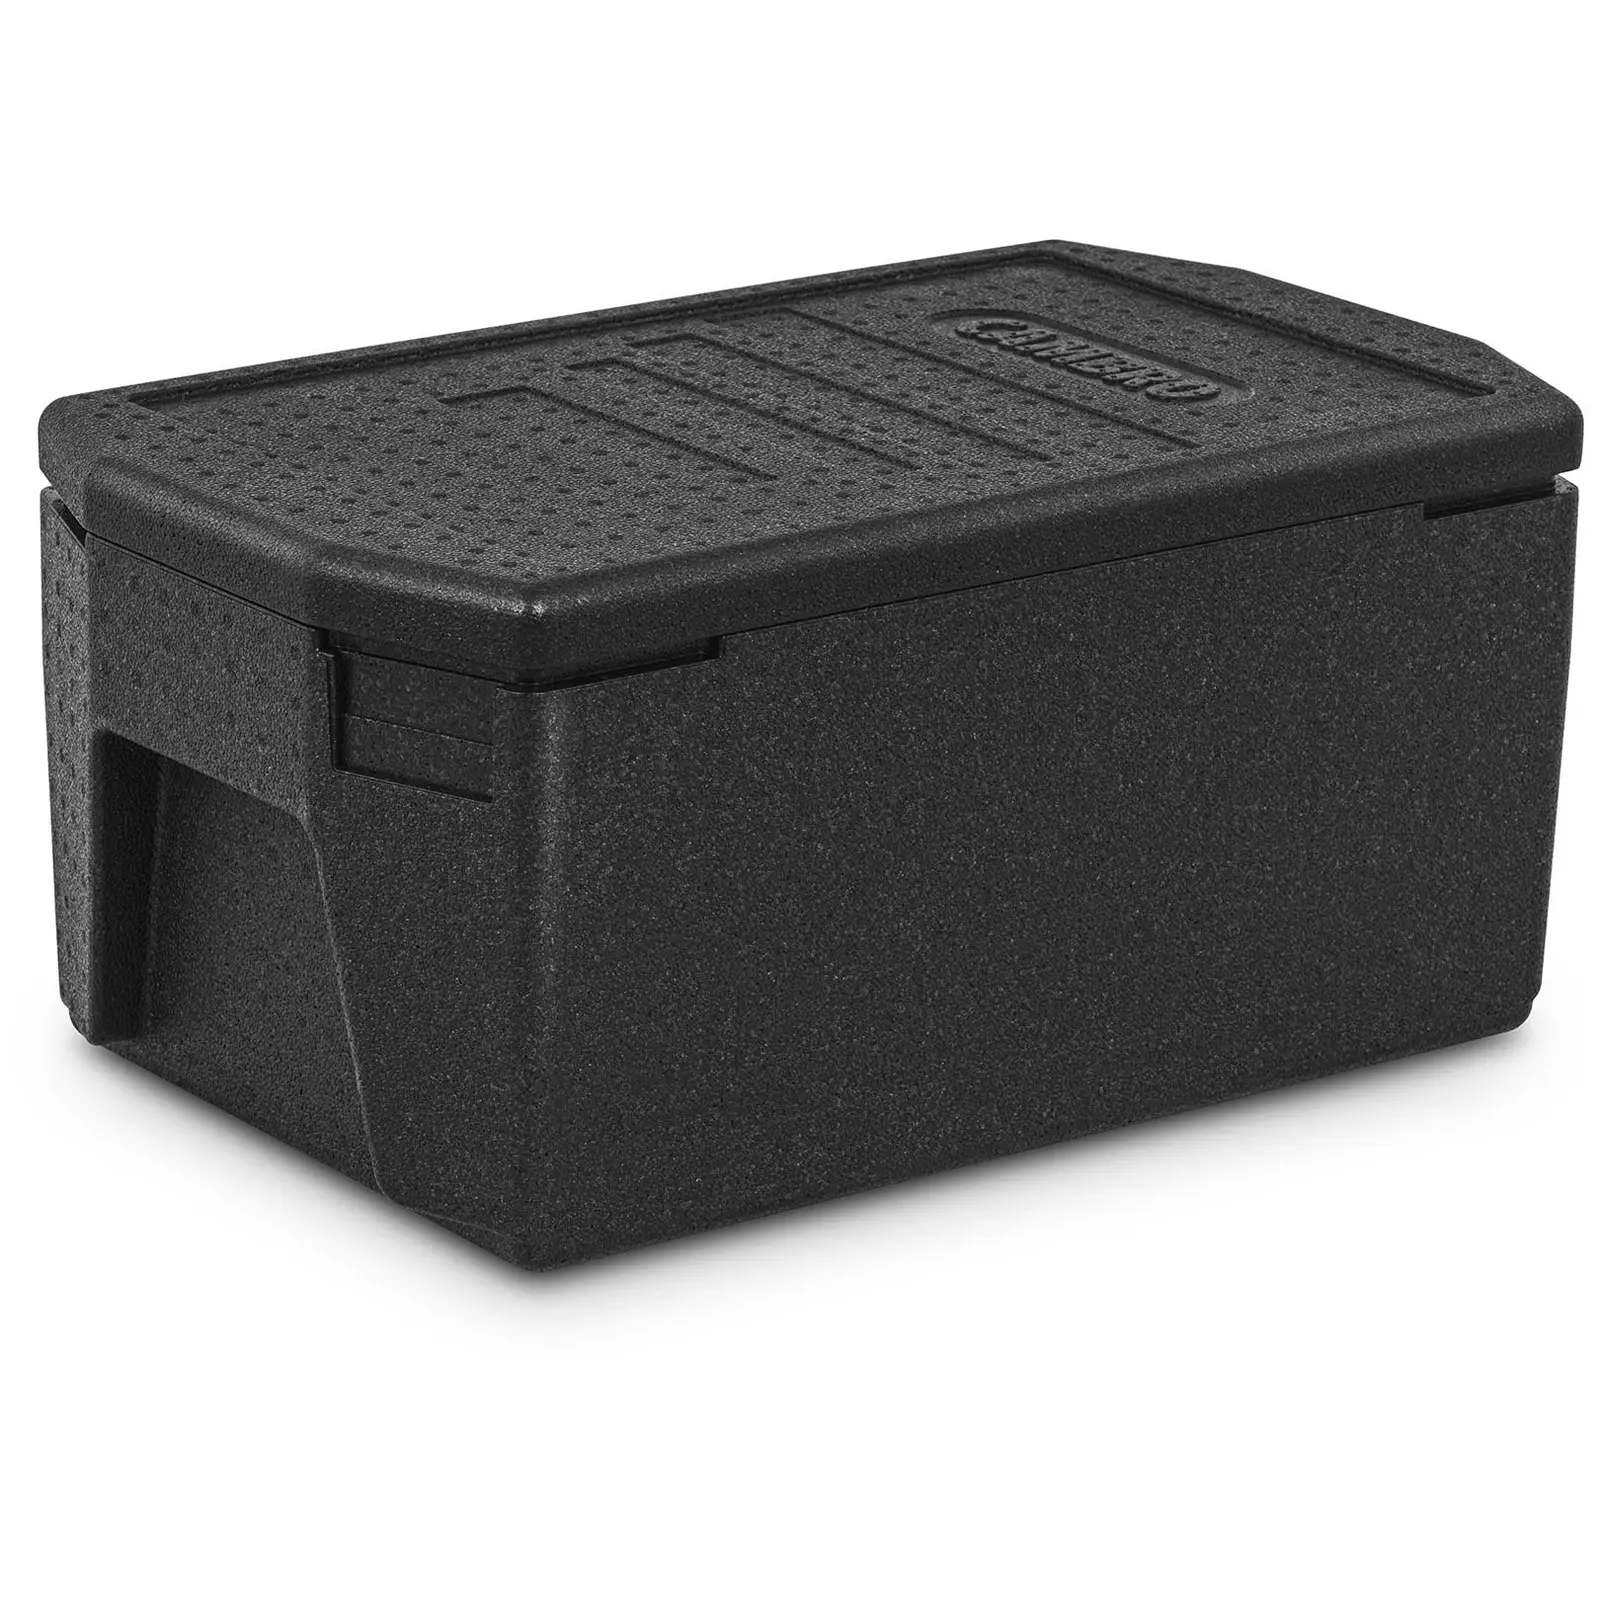 Caja térmica para alimentos - contenedor GN 1/1 (20 cm de profundidad) - asas XXL